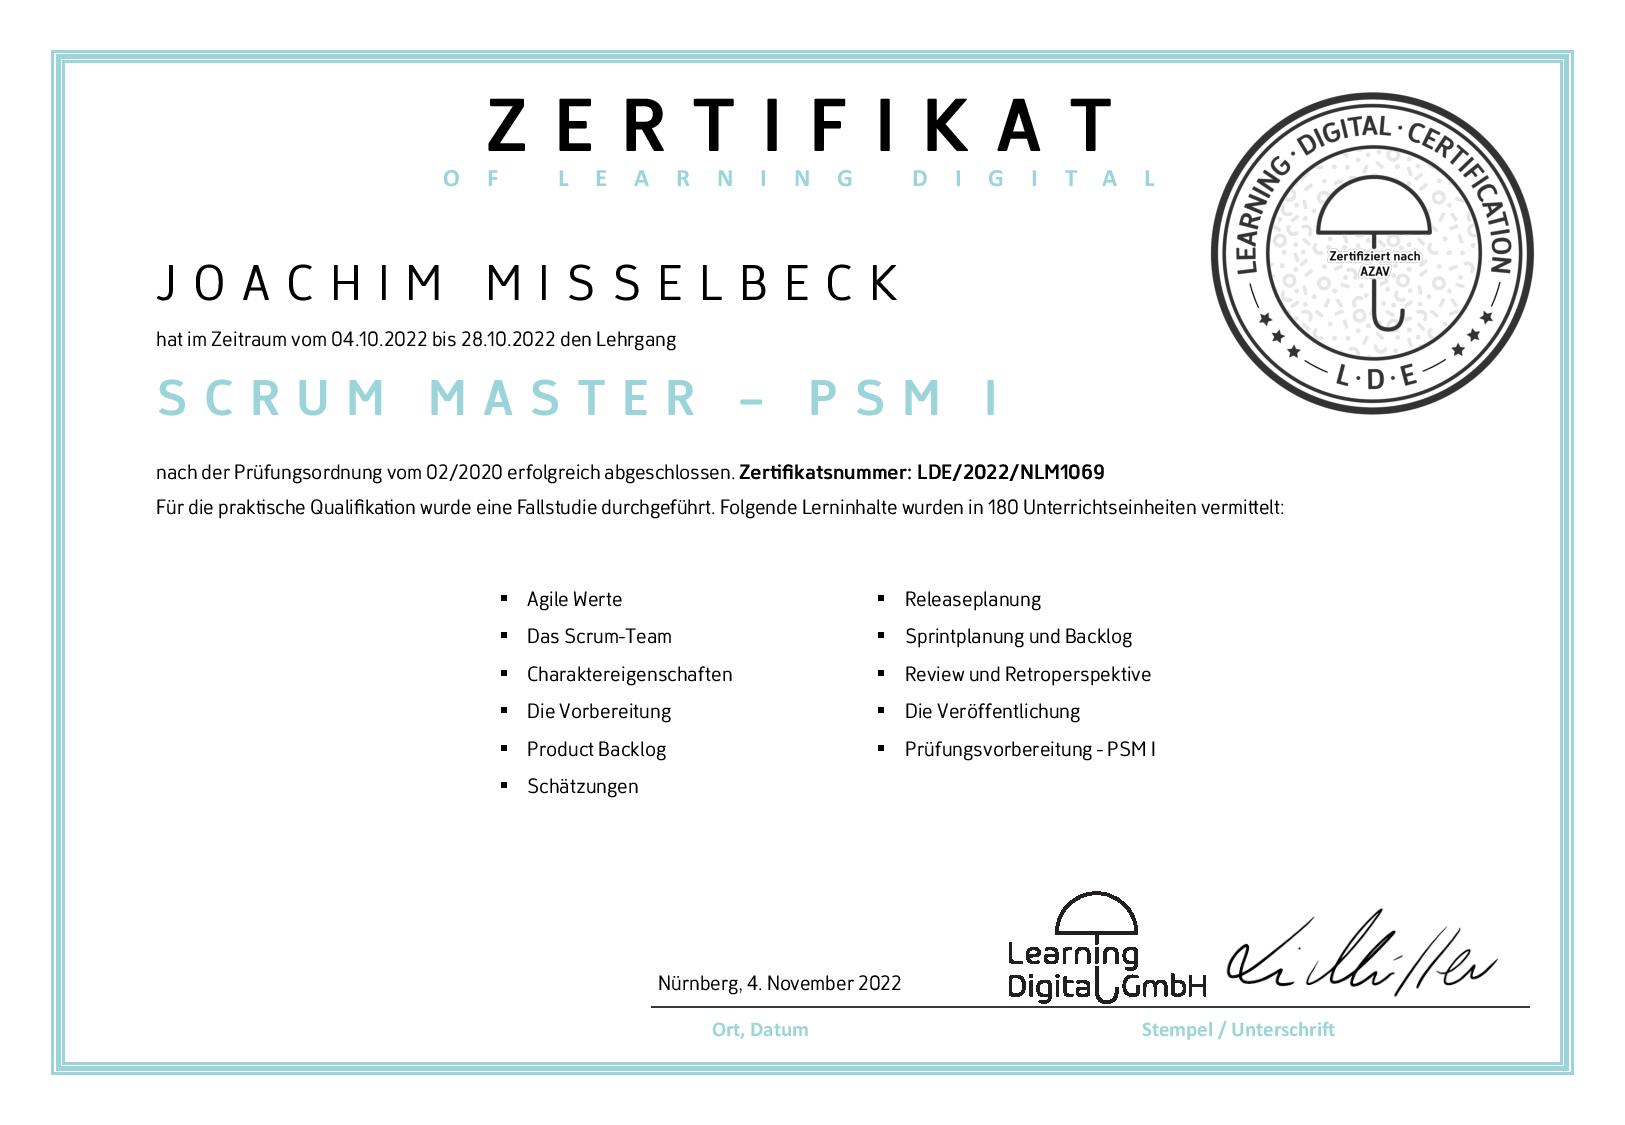 Joachim Misselbeck Zertifikat 2022.11.04 page 001